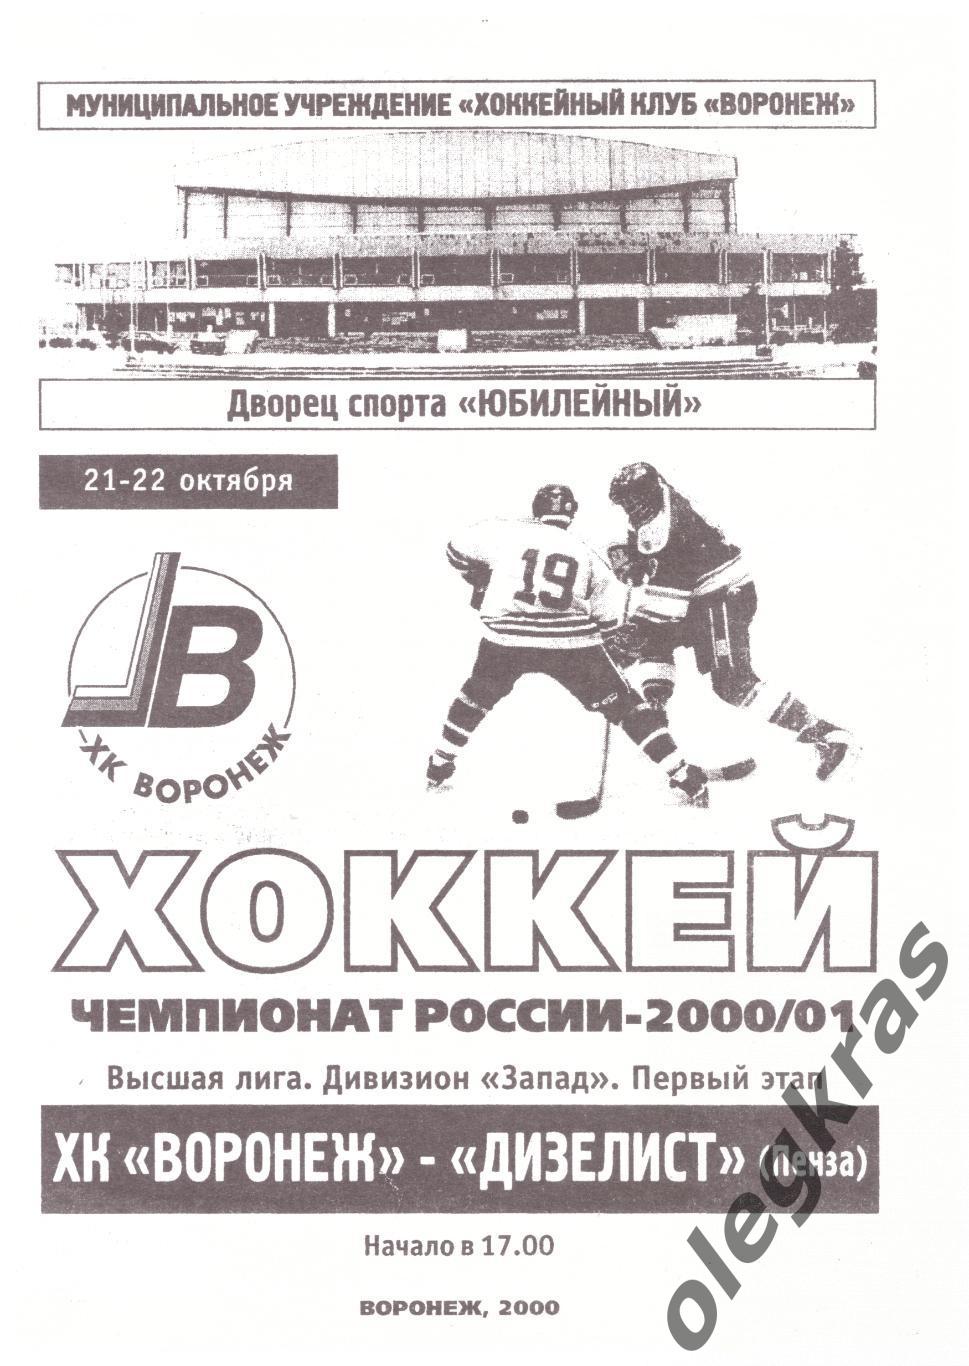 ХК Воронеж(Воронеж) - Дизелист(Пенза) - 21-22 октября 2000 года.